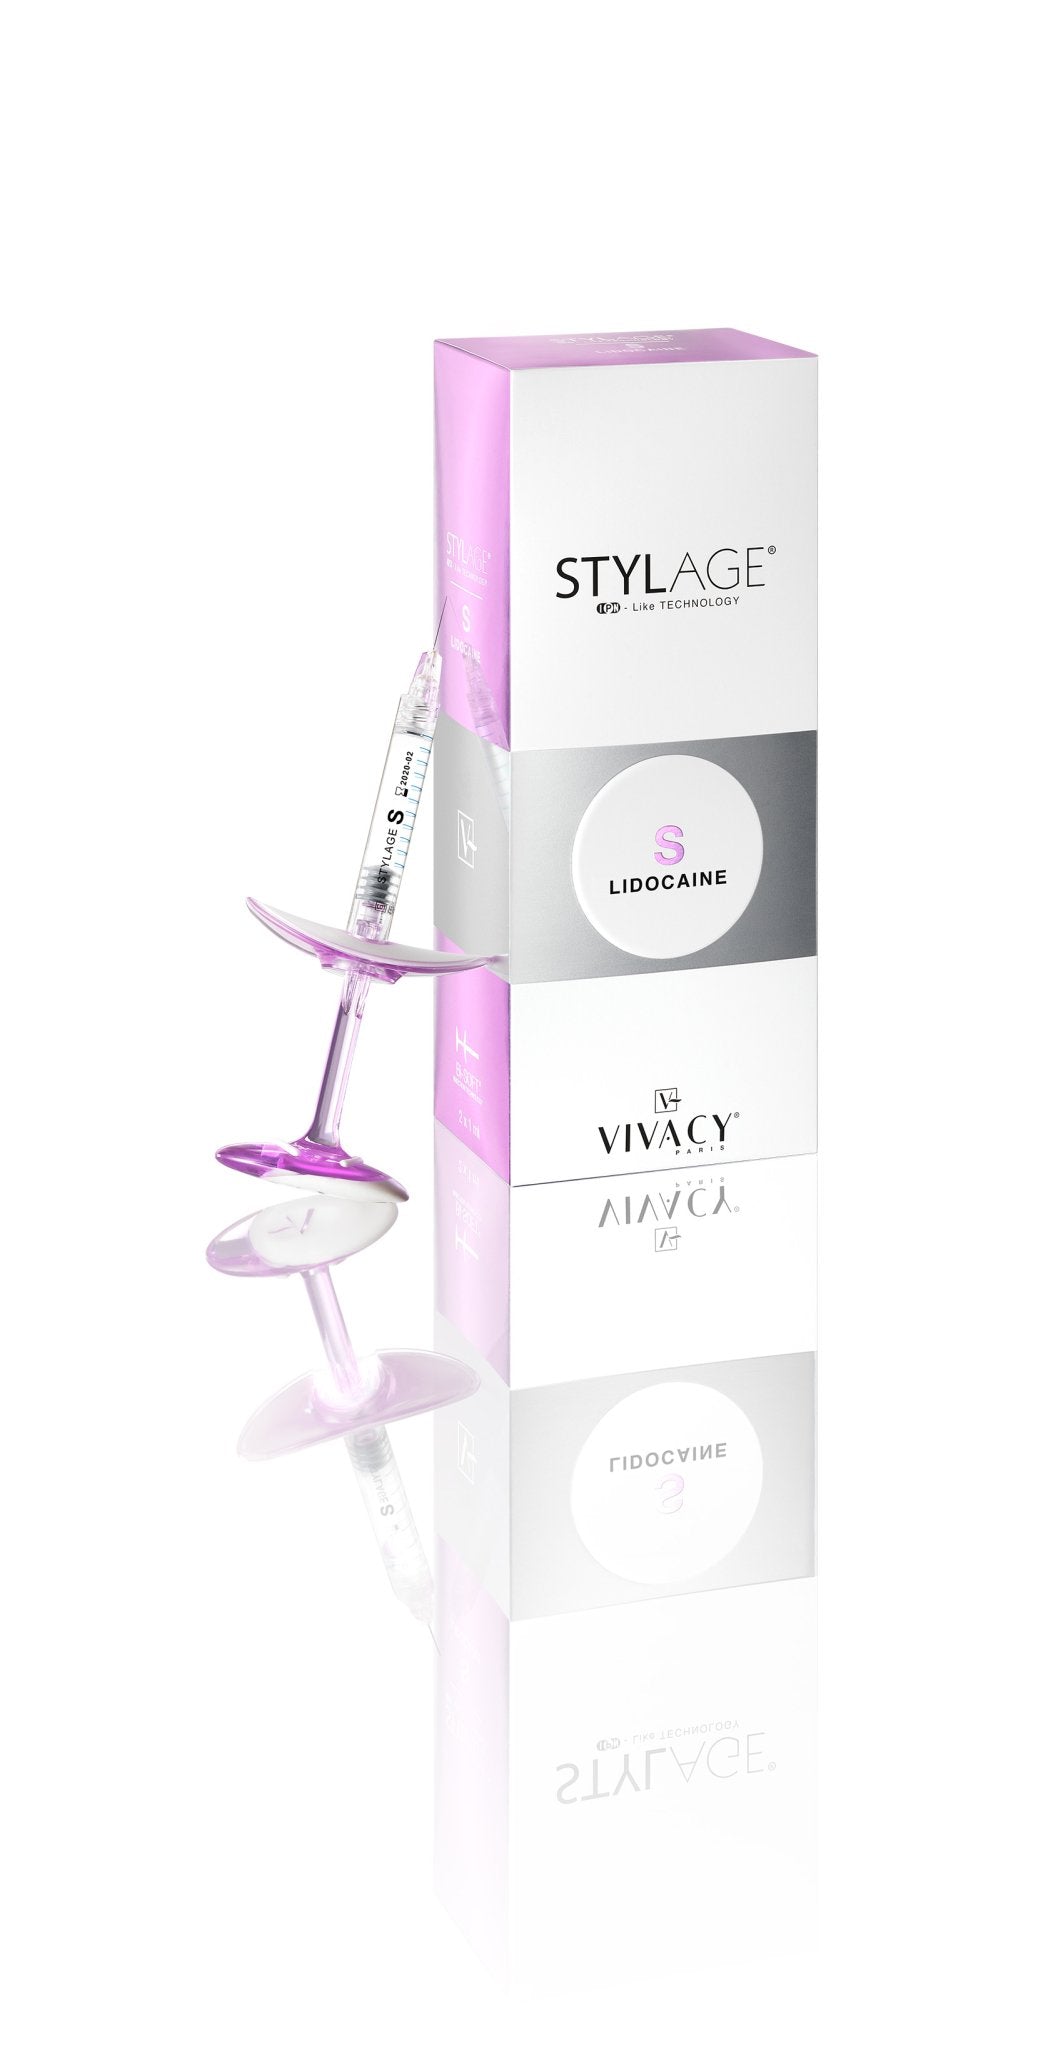 Vivacy - Stylage S Lidocaine Bi-Soft 2 x 0,8ml - DANYCARE